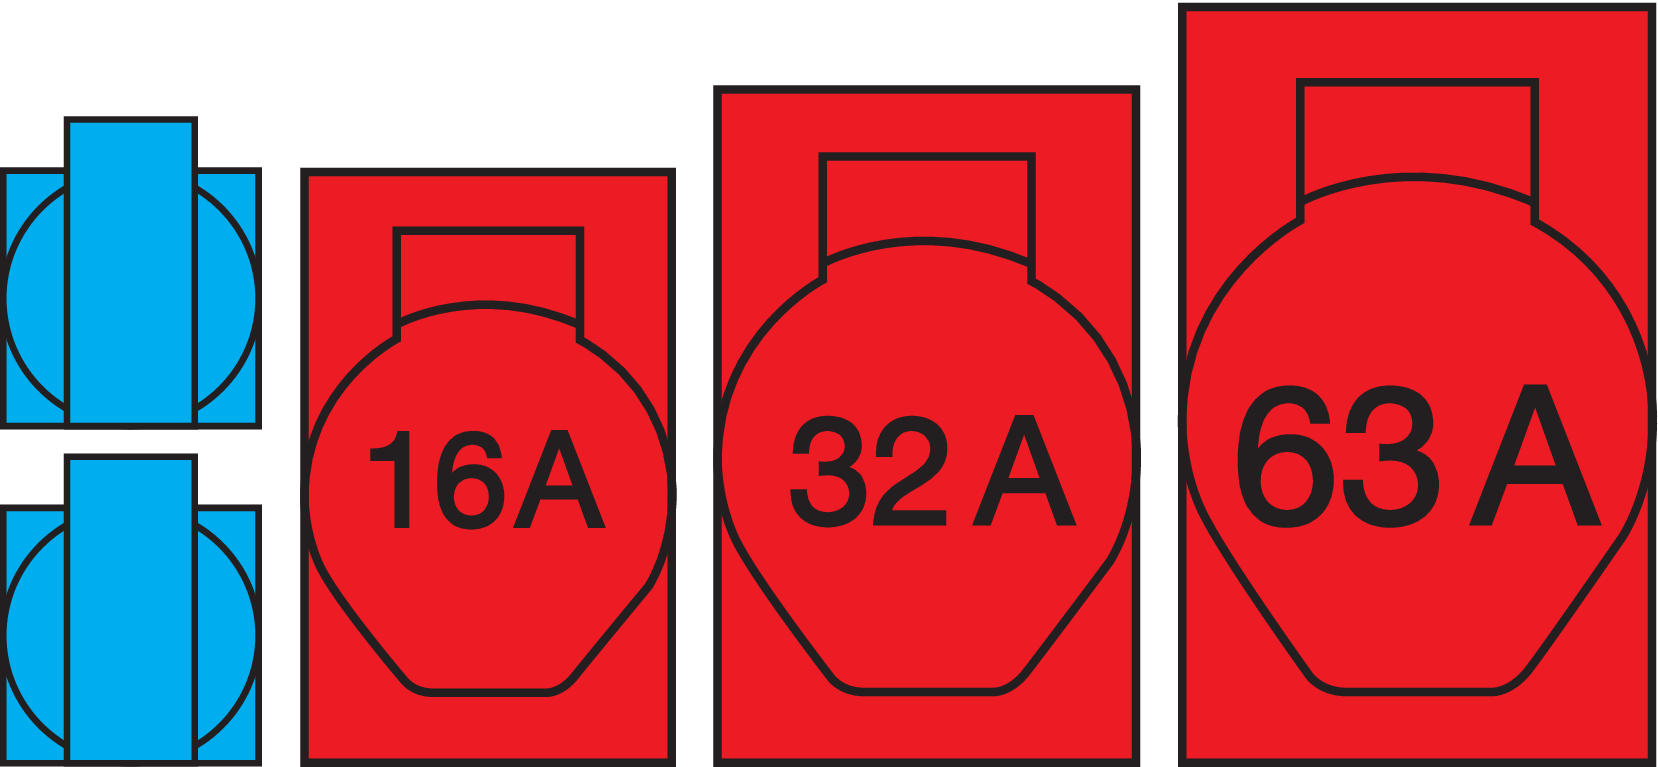 VOTHA WUPPERTAL wandverdeler - bedraad met 1x CEE 63 A, 1x CEE 32 A, 1x CEE 16 A, 2x WCD'S 230 V en aardlekschakelaar 63 A 0,03 A (4P)